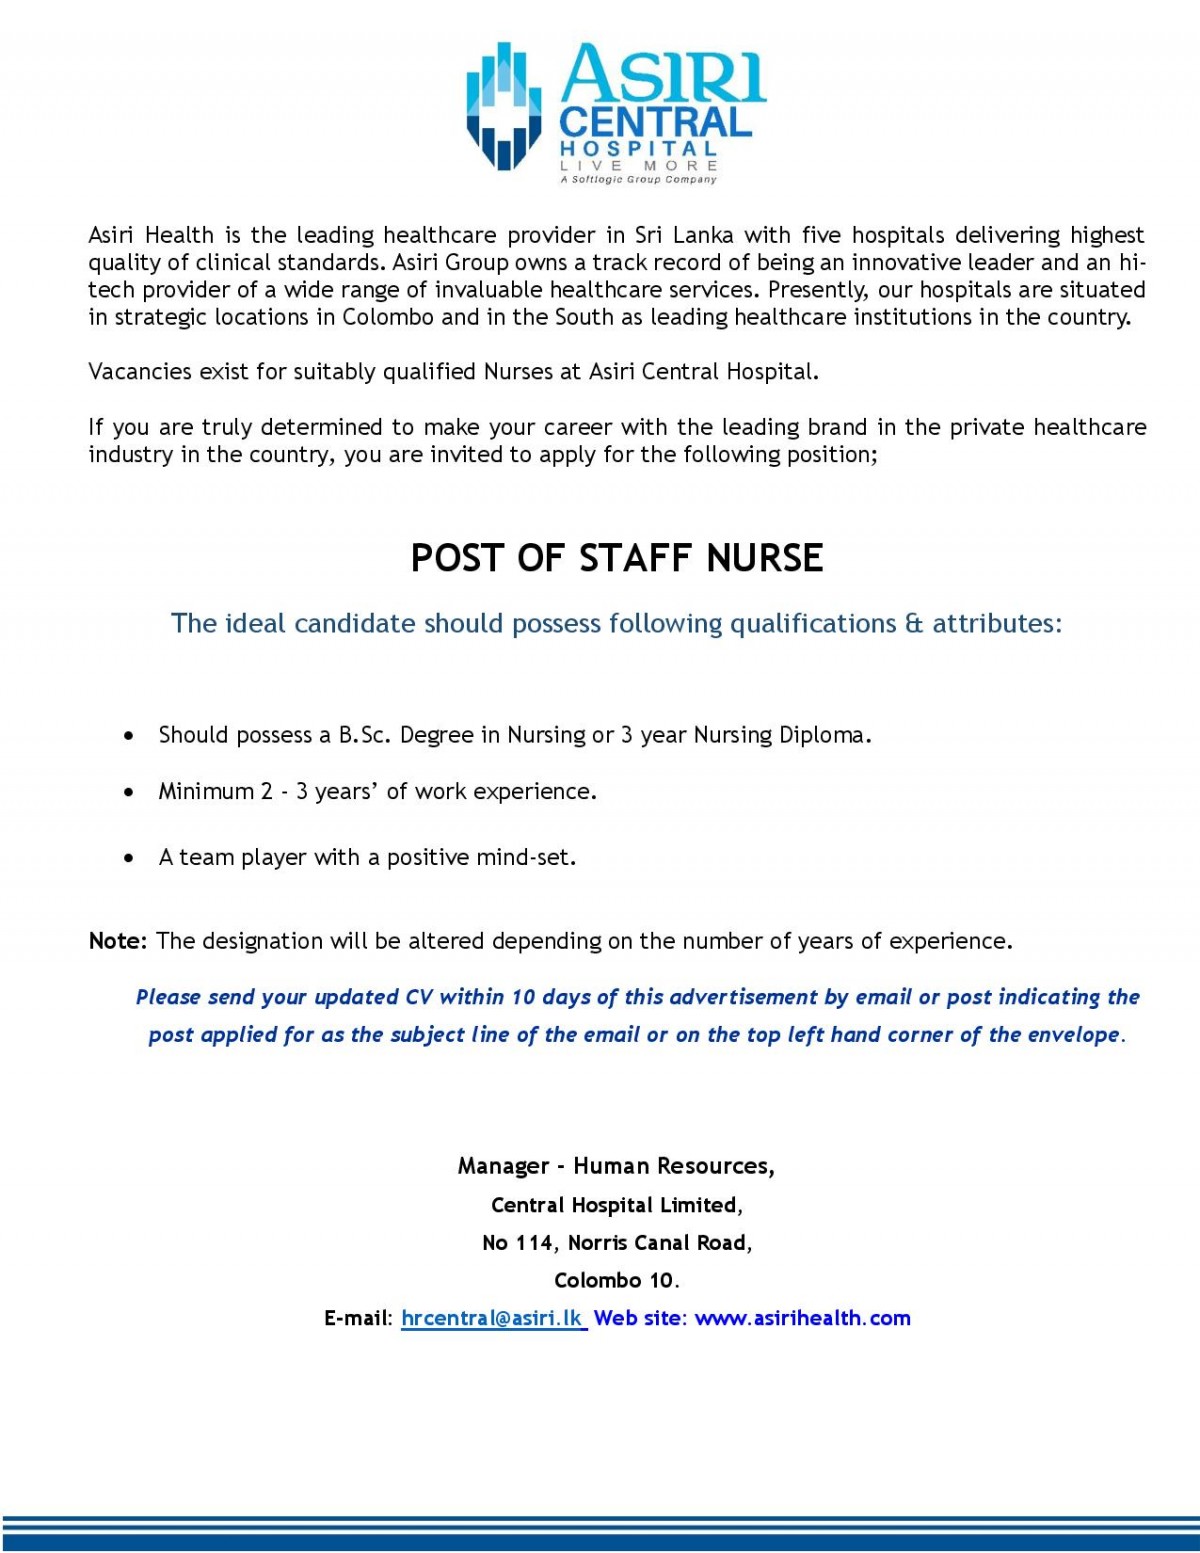 Nursing Officer Jobs Vacancies - Asiri Hospital Job Vacancy Details